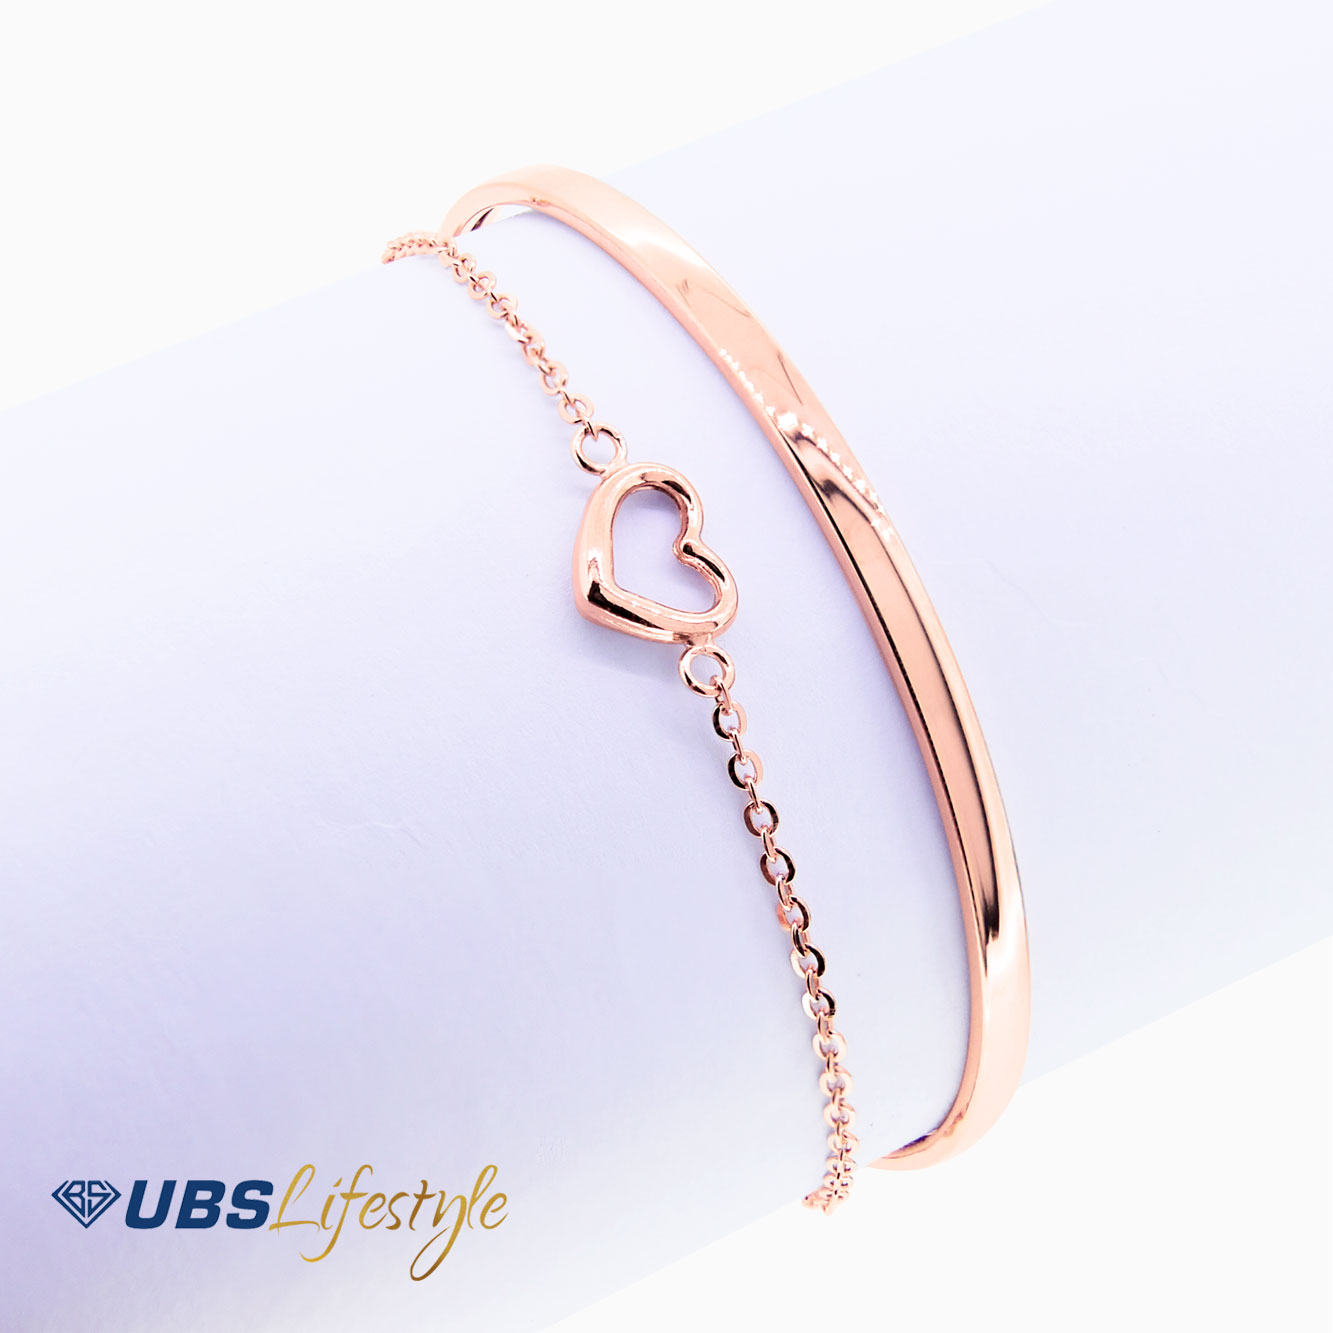  GELANG  EMAS UBS  UBSLifestyle Perhiasan Emas Gold Jewelry